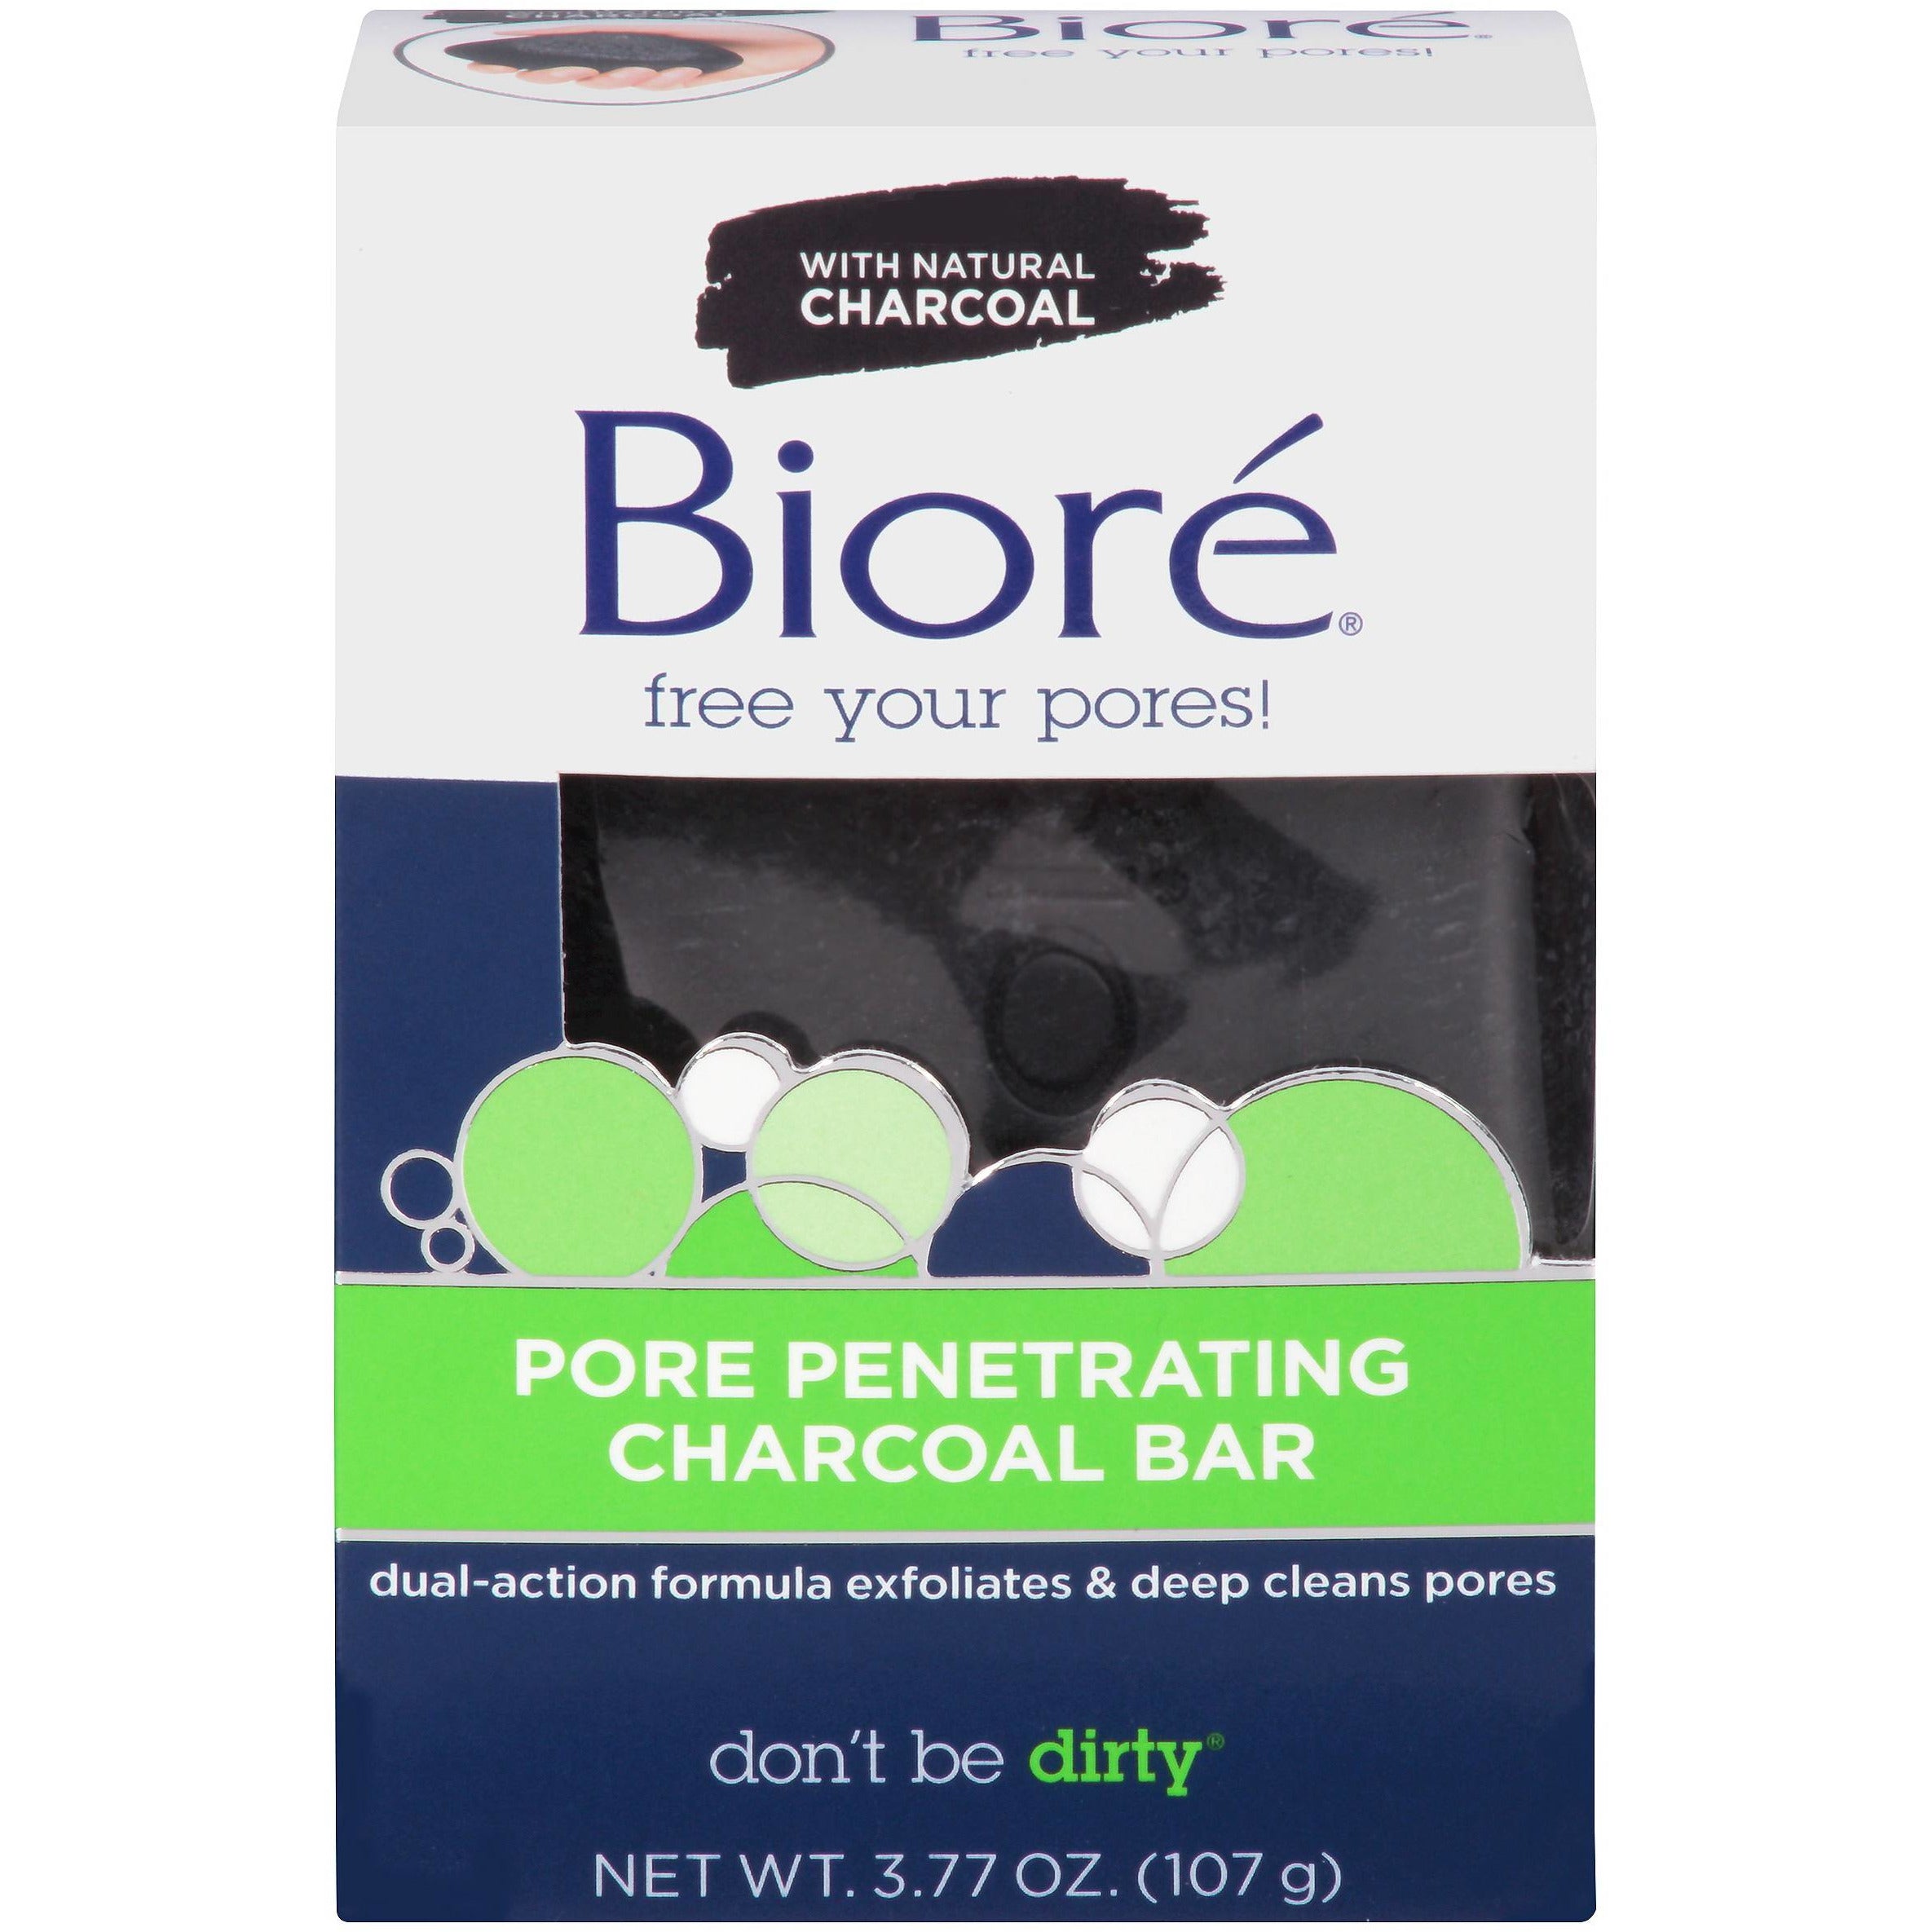 4th Ave Market: Bior Pore Penetrating Charcoal Bar